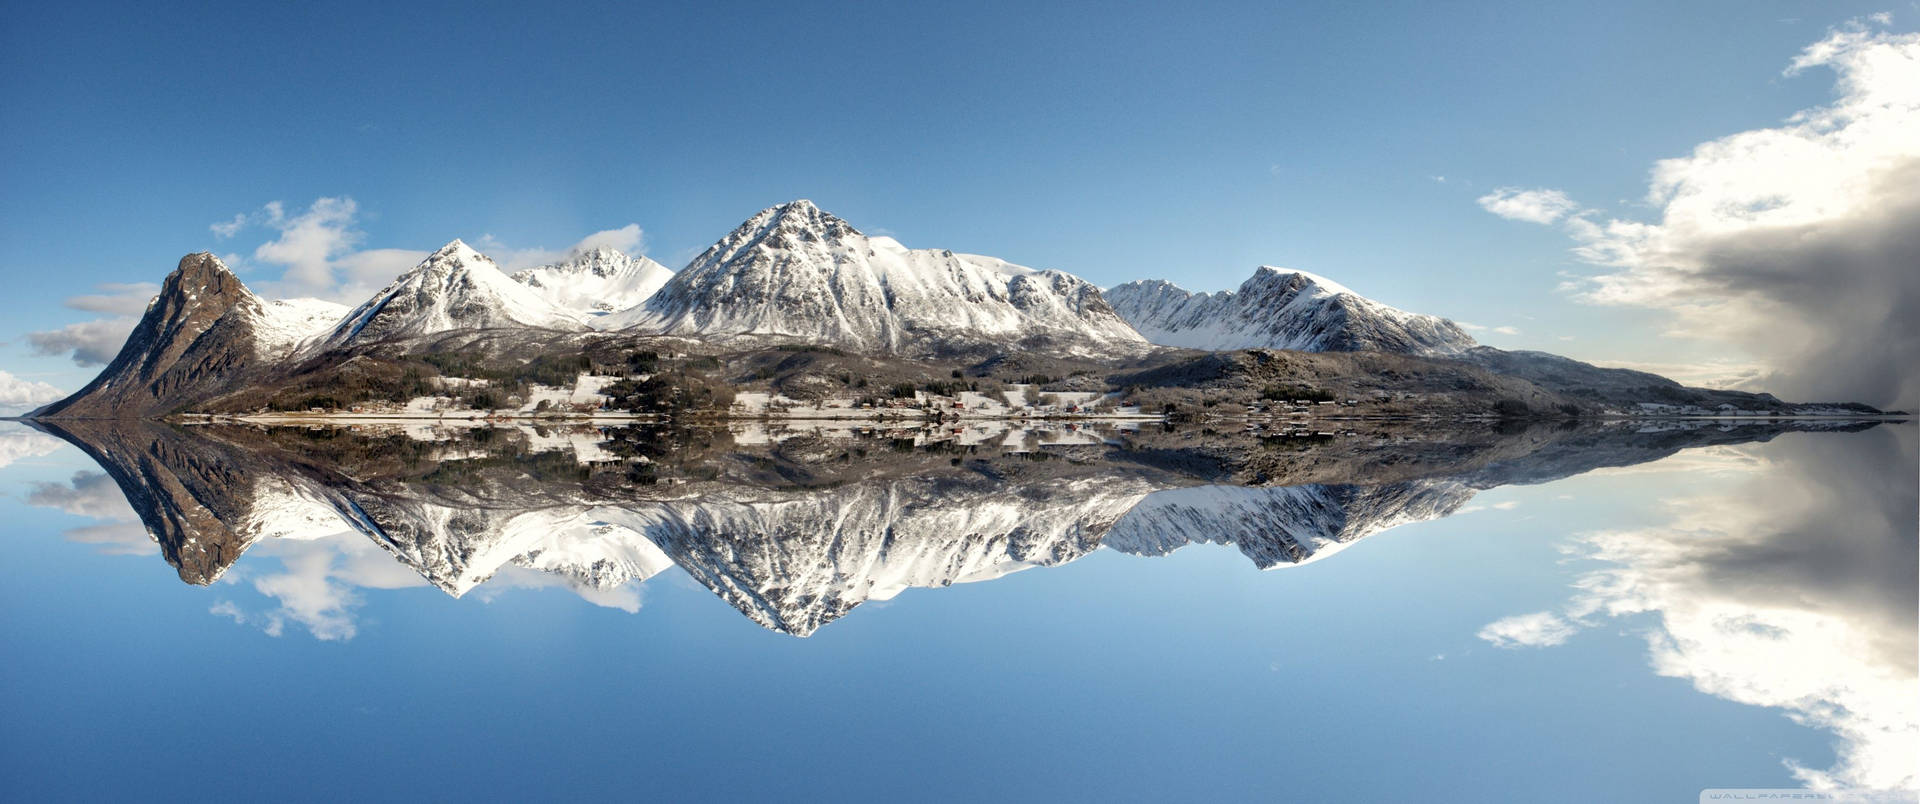 Download Ultrawide Snowy Mountain Reflection Wallpaper